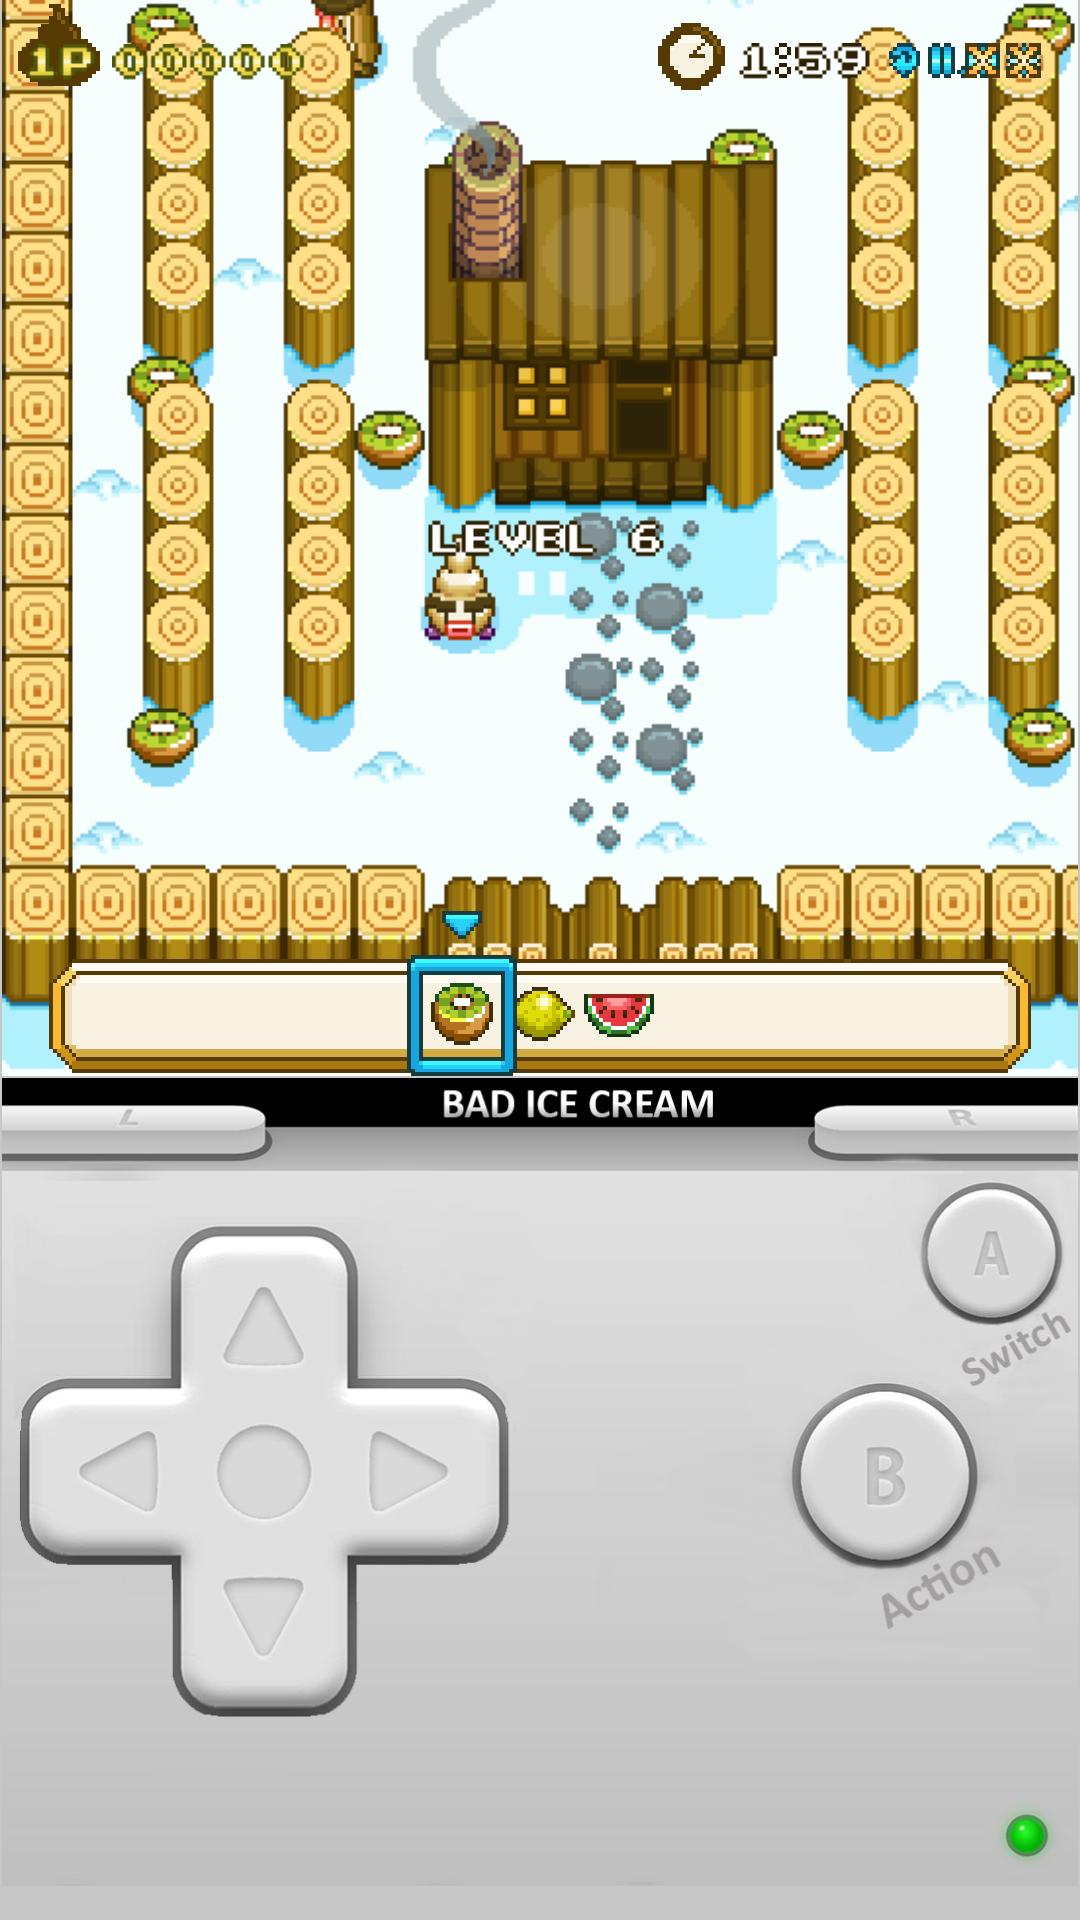 Bad Ice Cream Mobile: Ice-cream in bad icy war APK 4.0.1 for Android – Download  Bad Ice Cream Mobile: Ice-cream in bad icy war APK Latest Version from